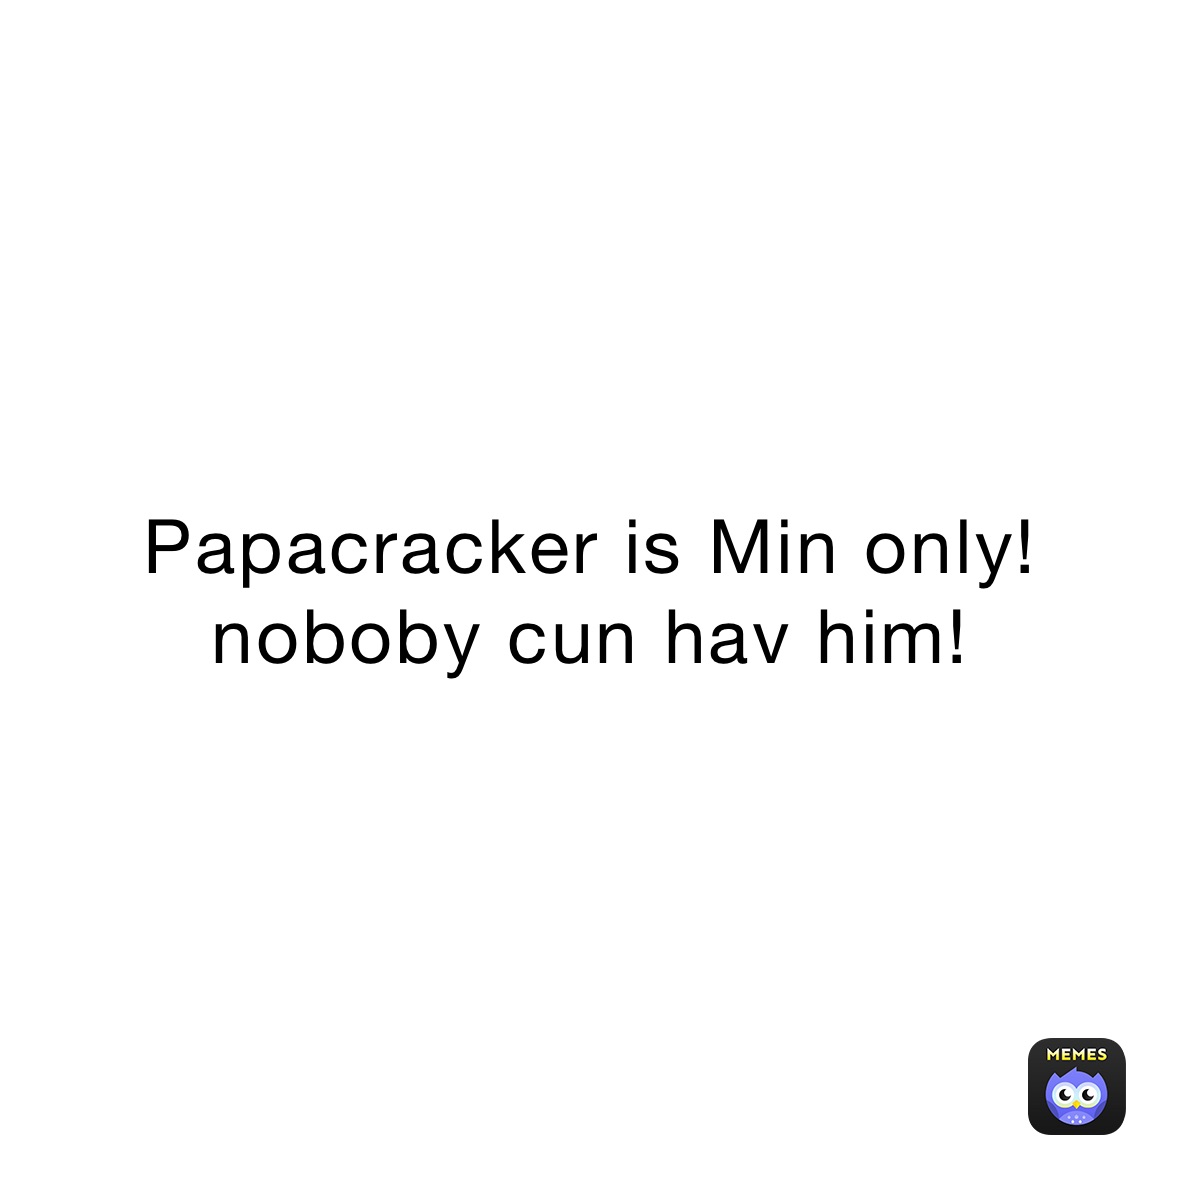 Papacracker is Min only! noboby cun hav him!